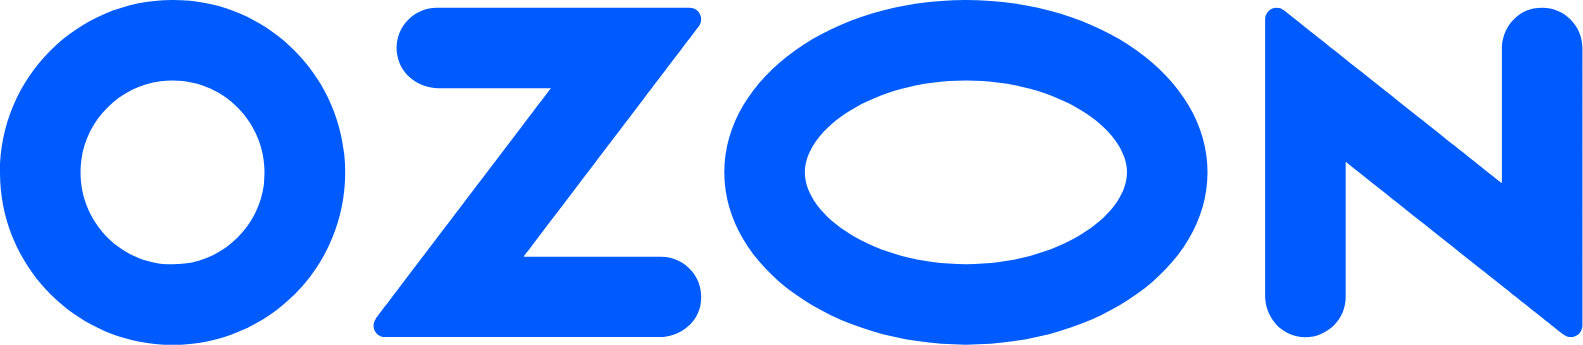 Ozon logo (transparent PNG)